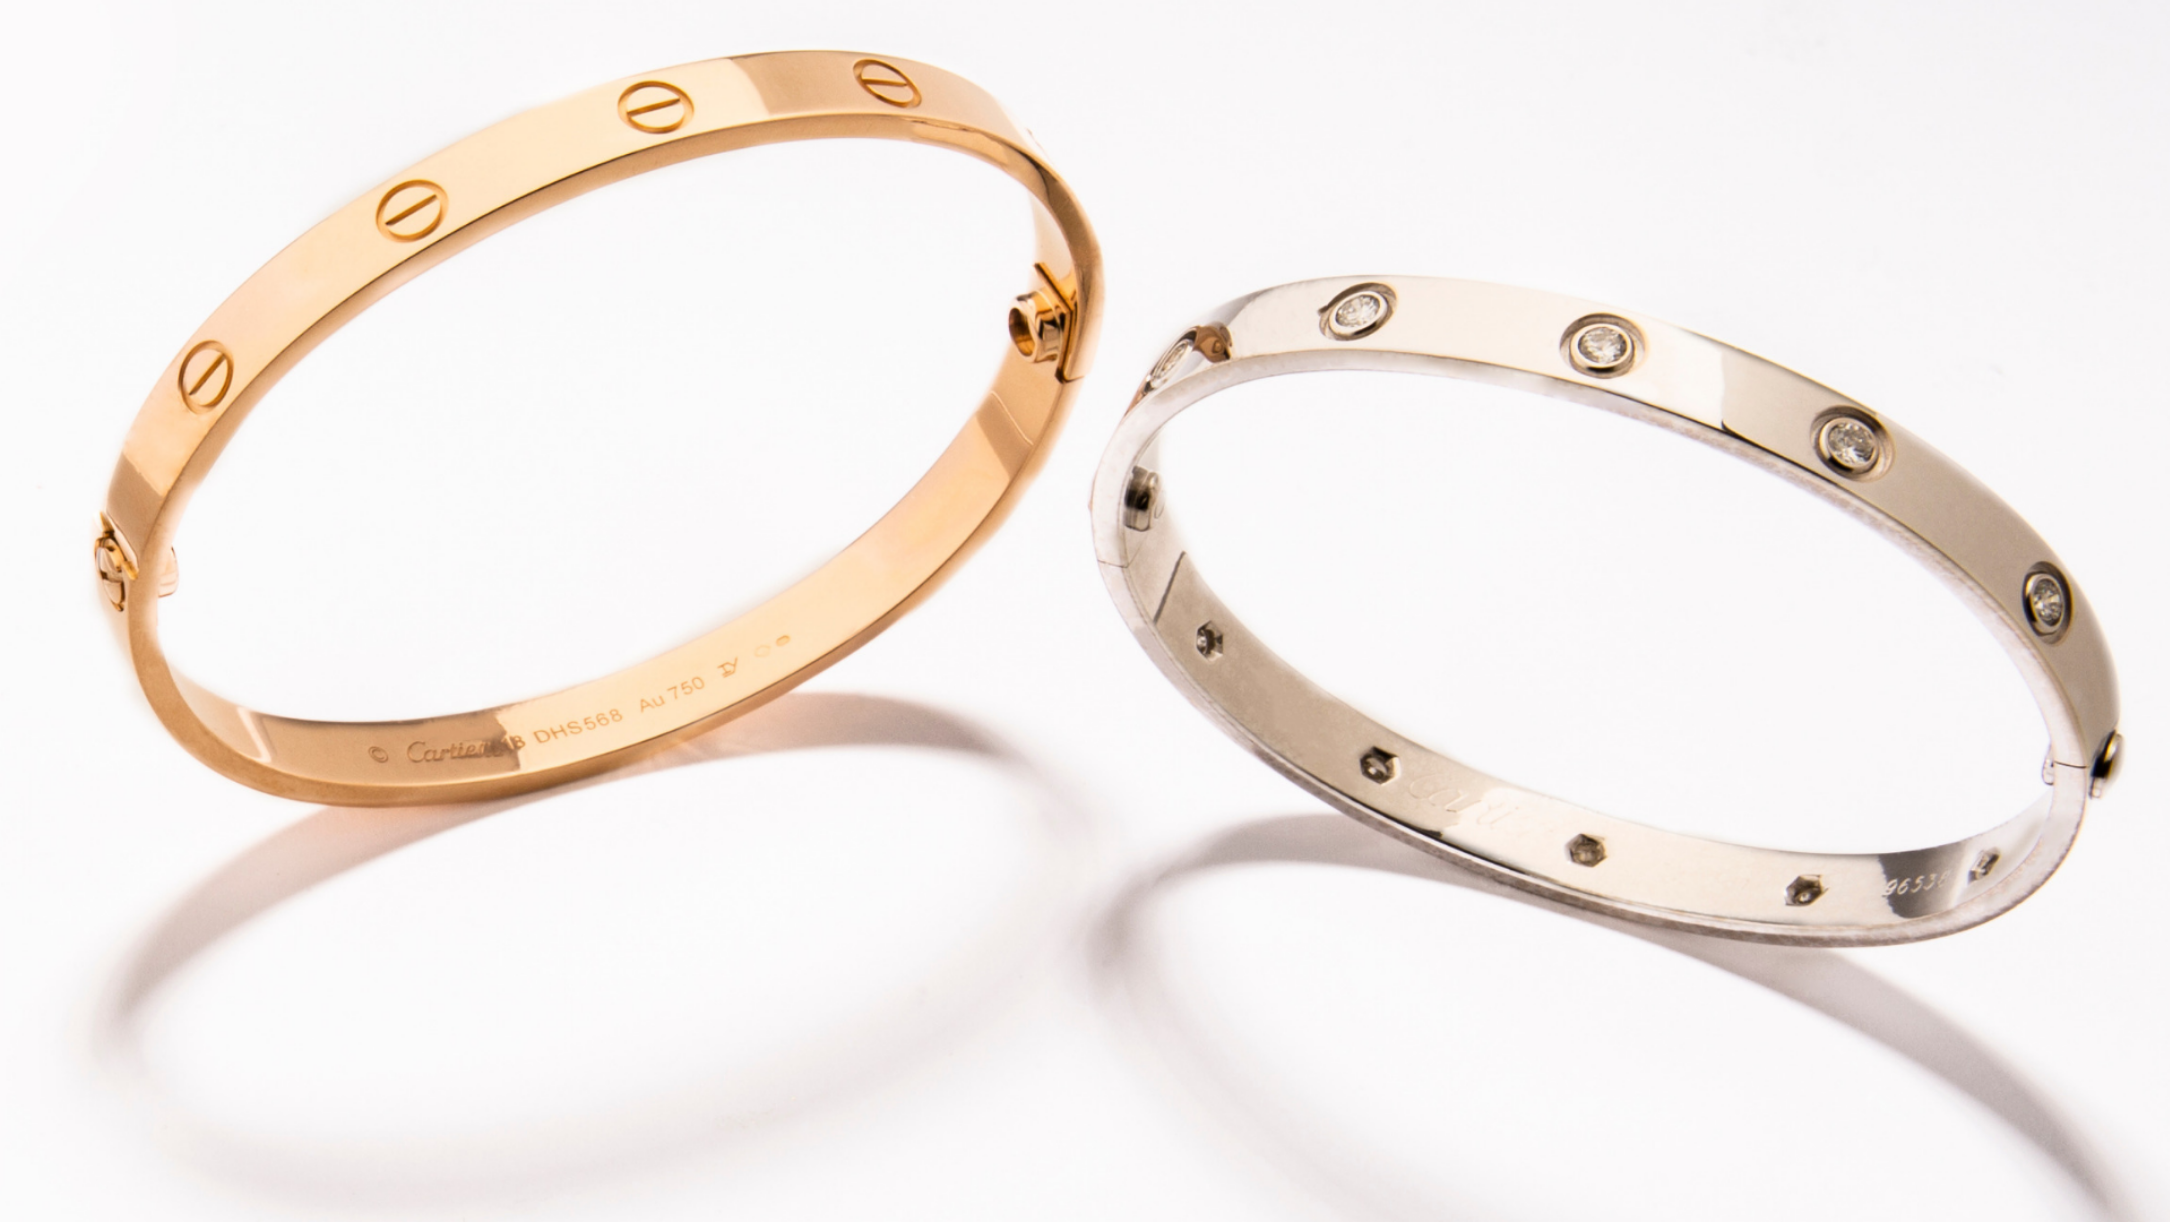 Details more than 65 cartier love bracelet usa super hot